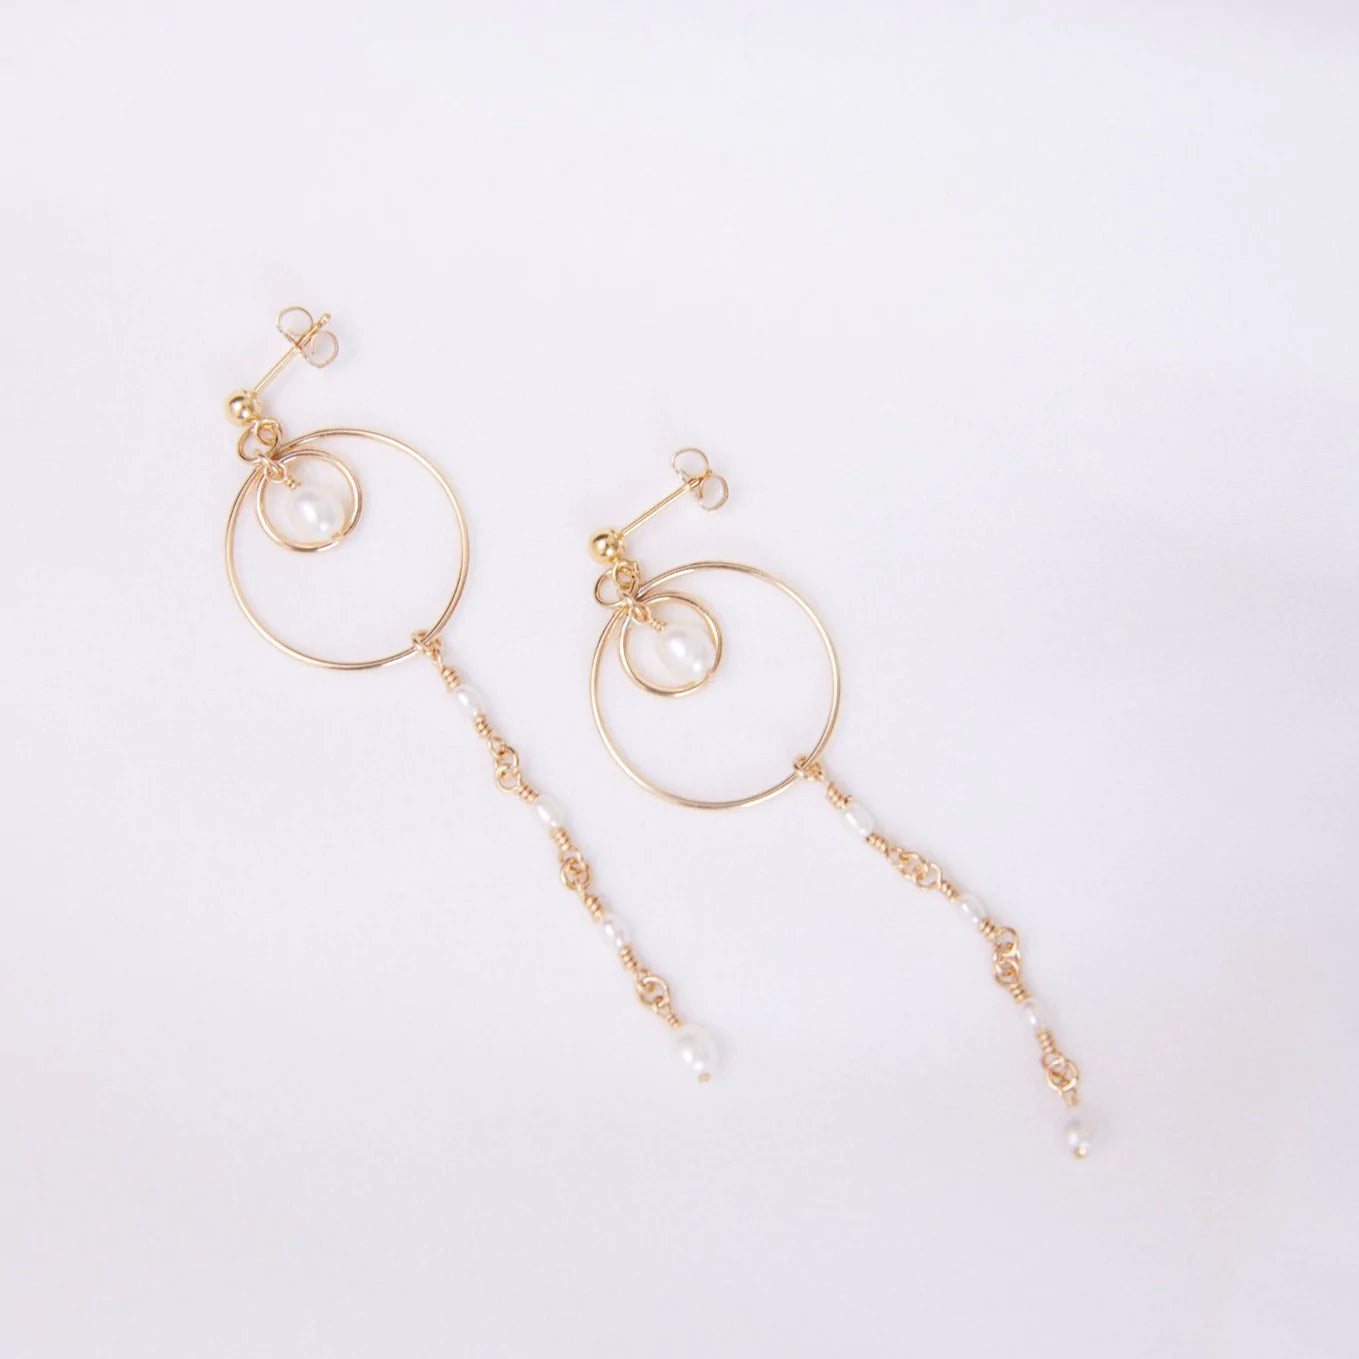 Alana Maria Belle Earrings, Gold